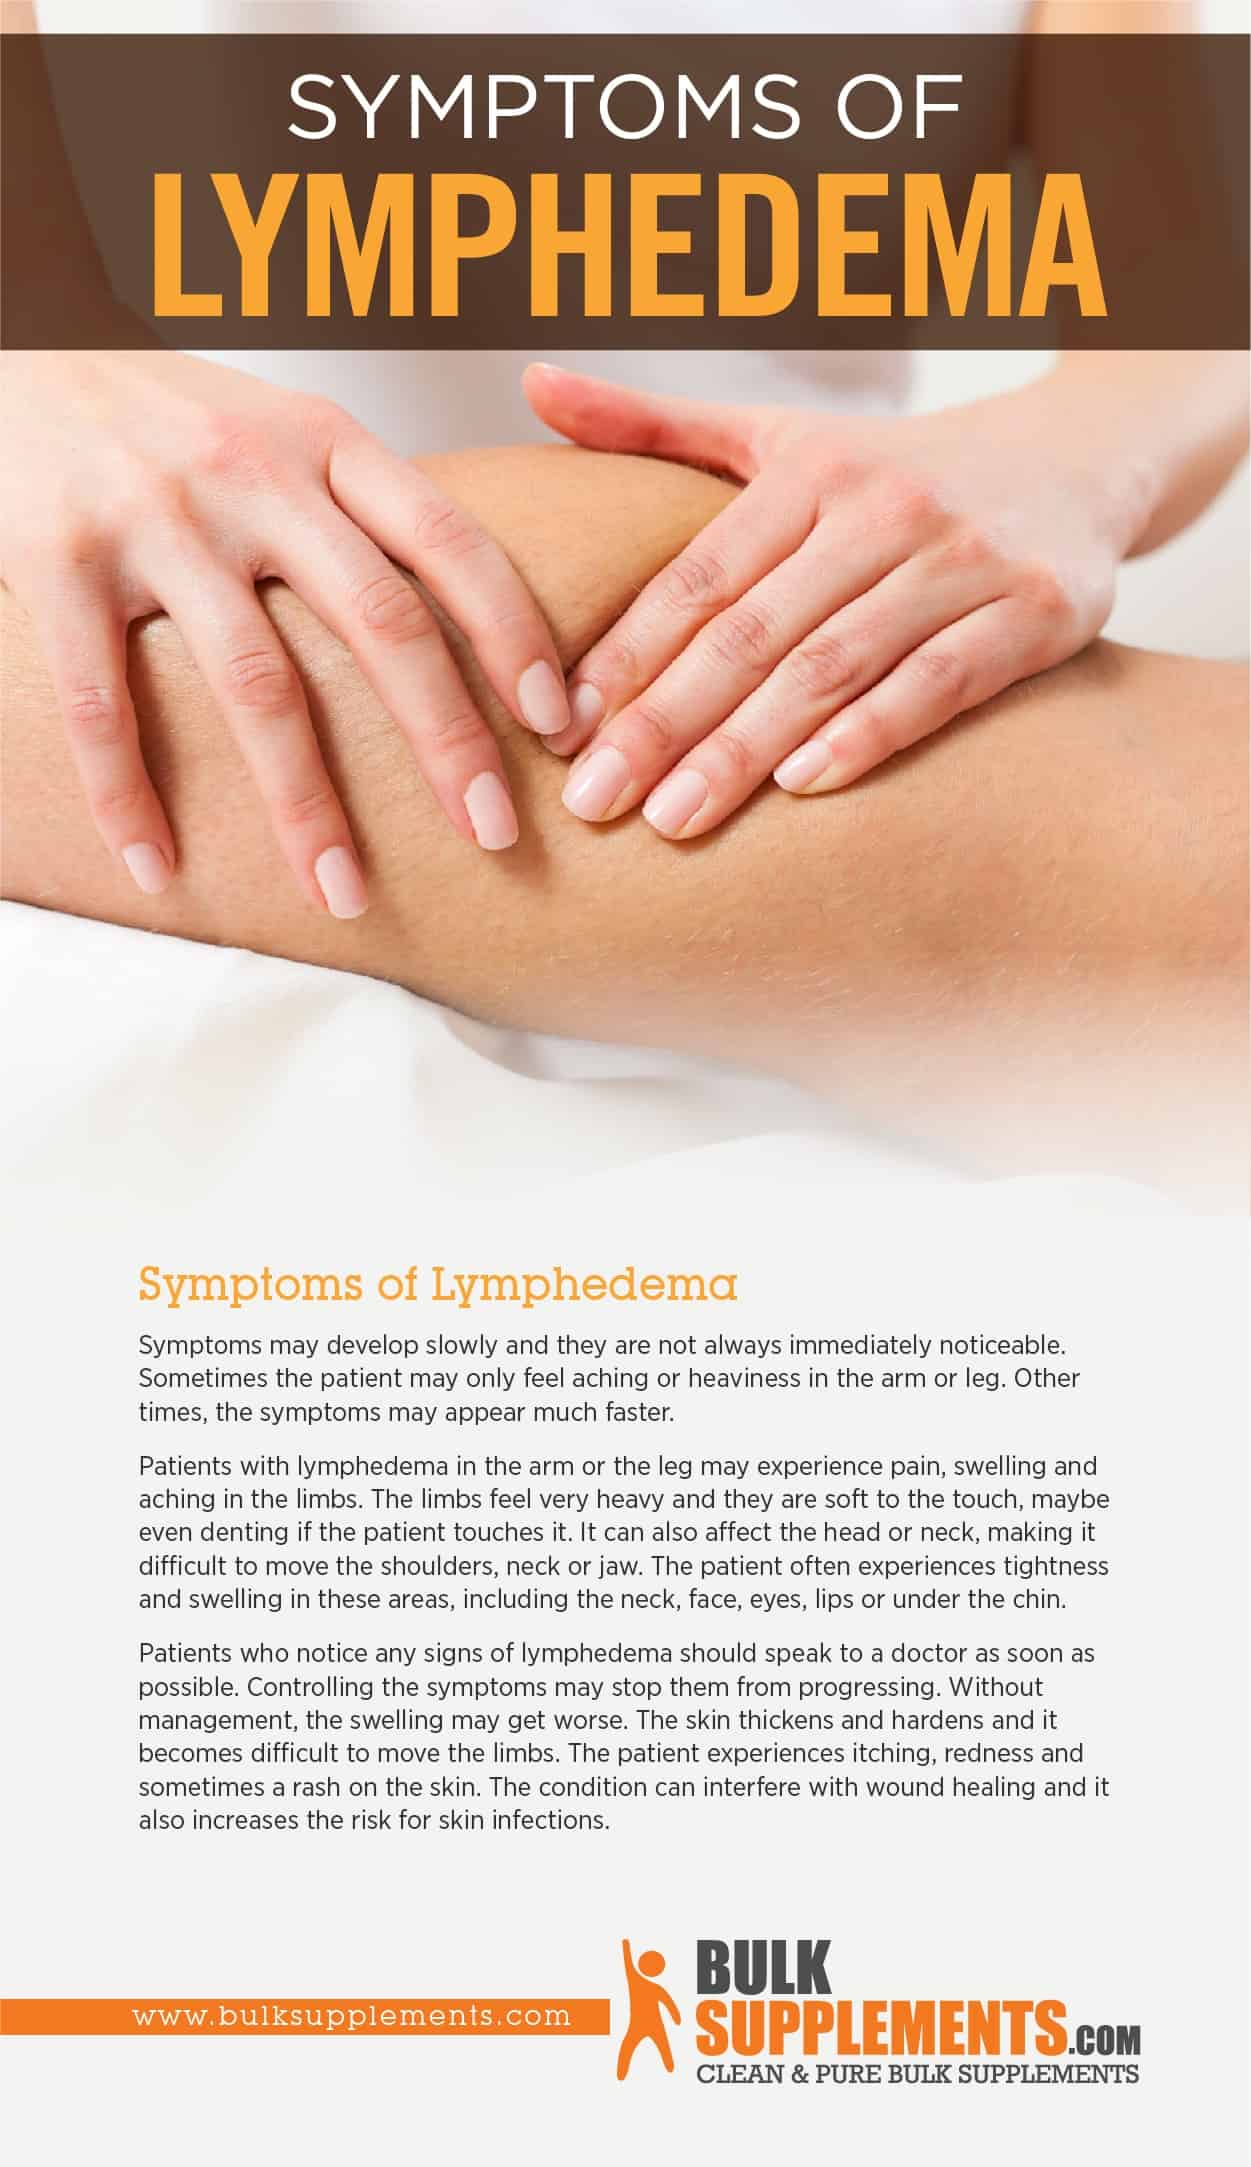 Symptoms of Lymphedema